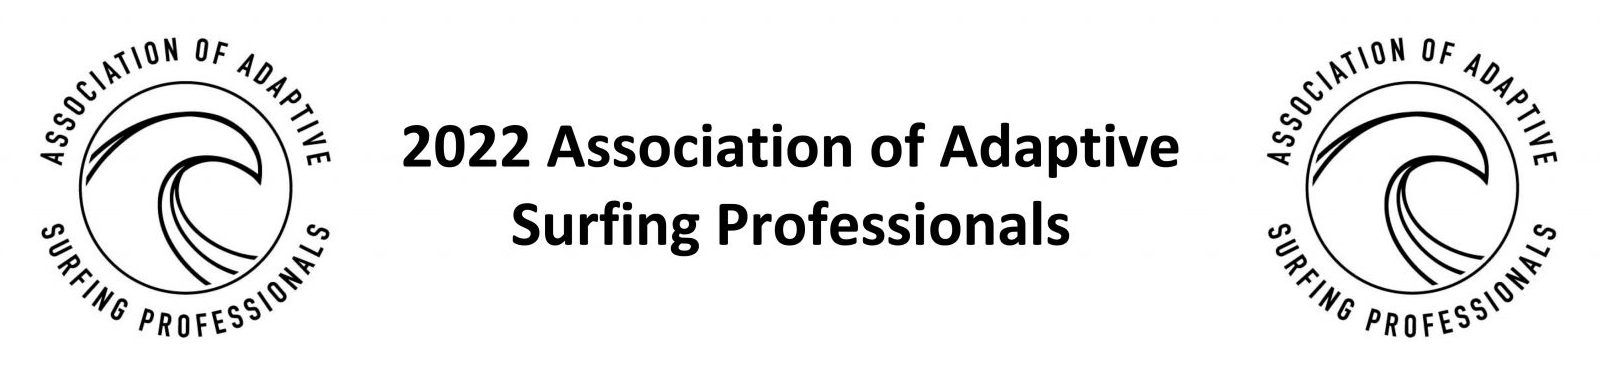 2022 Association of Adaptive Surfing Professionals